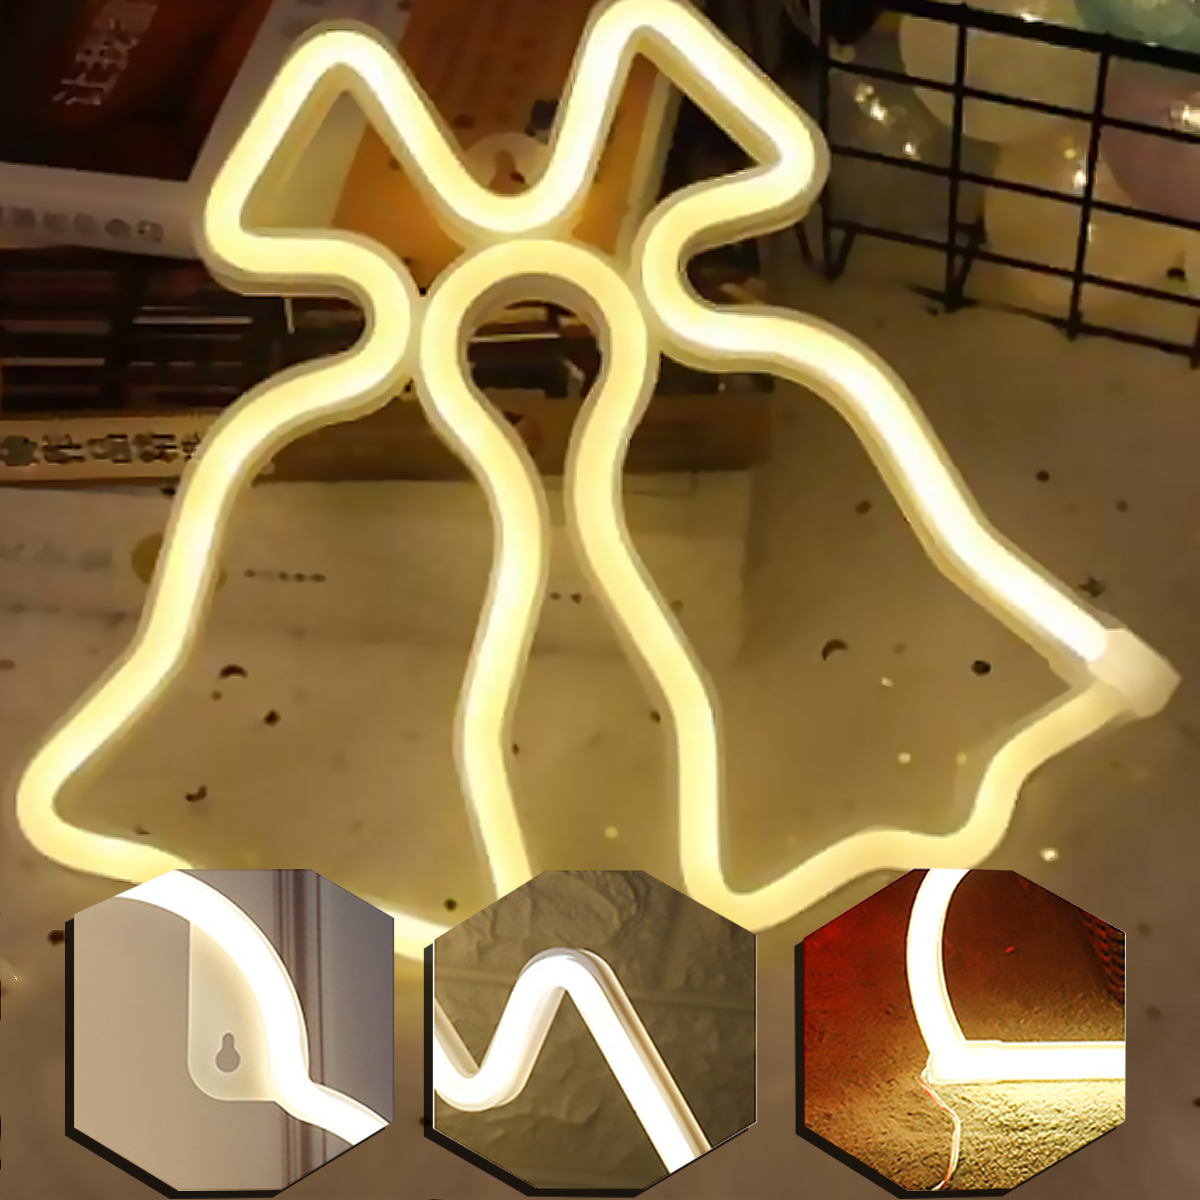 BatteryUSB-Neon-Light-Sign-LED-Lamp-Shaped-Night-Light-Art-Wall-Warm-Party-Christmas-Decoration-1800988-7